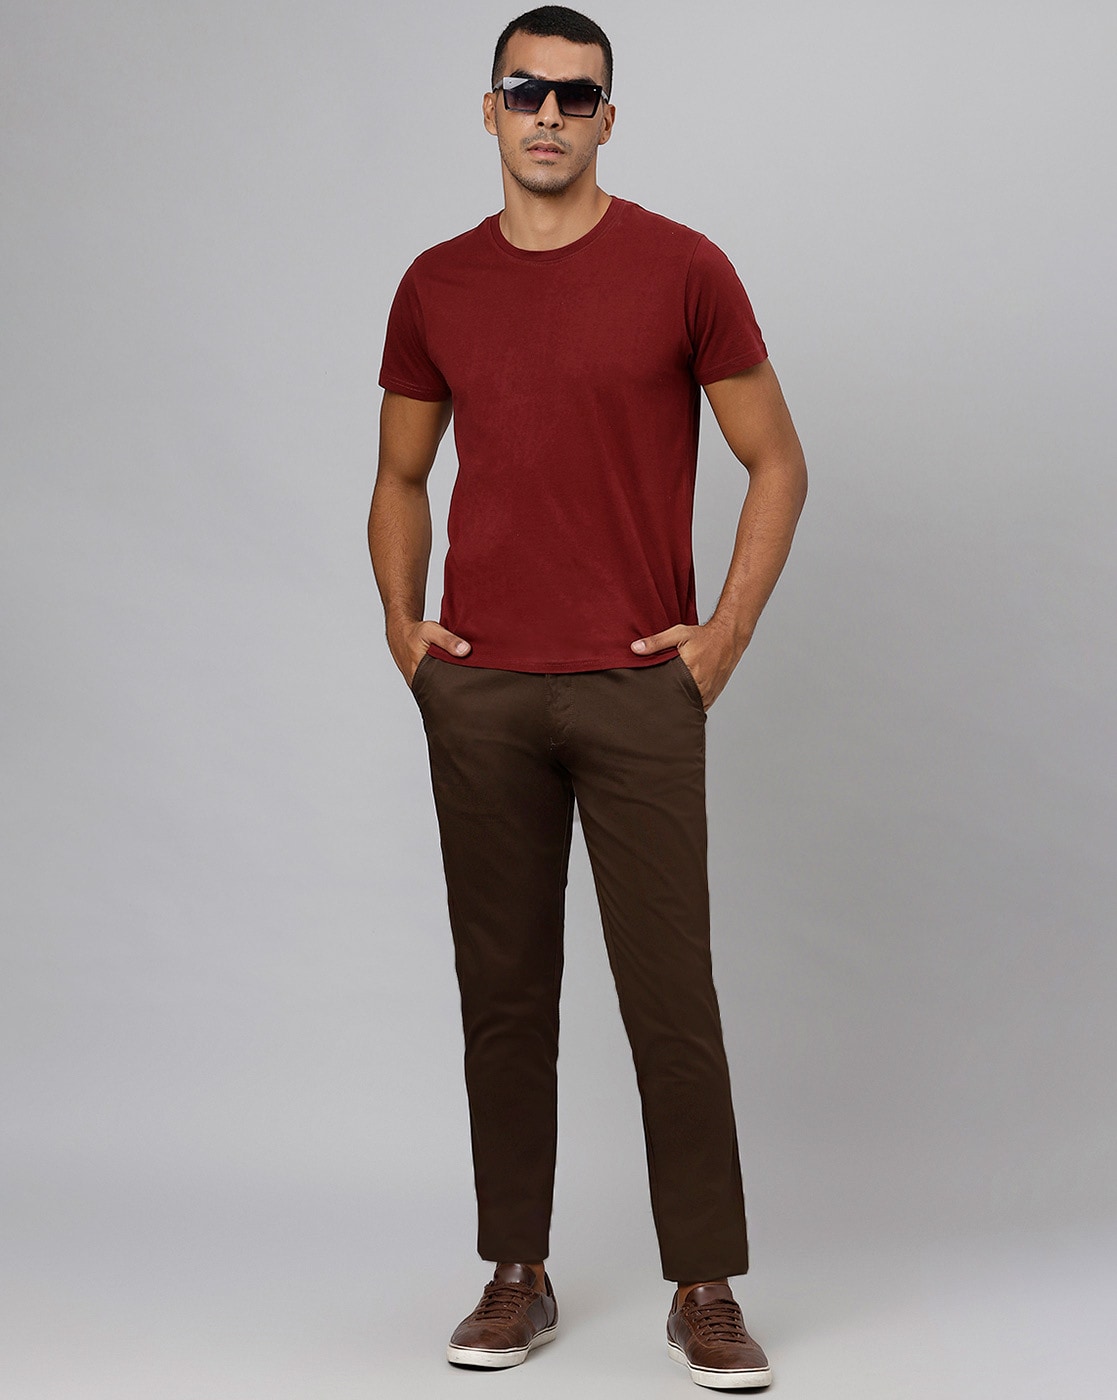 Formal Trouser: Buy Men Brown Cotton Blend Formal Trouser on Cliths